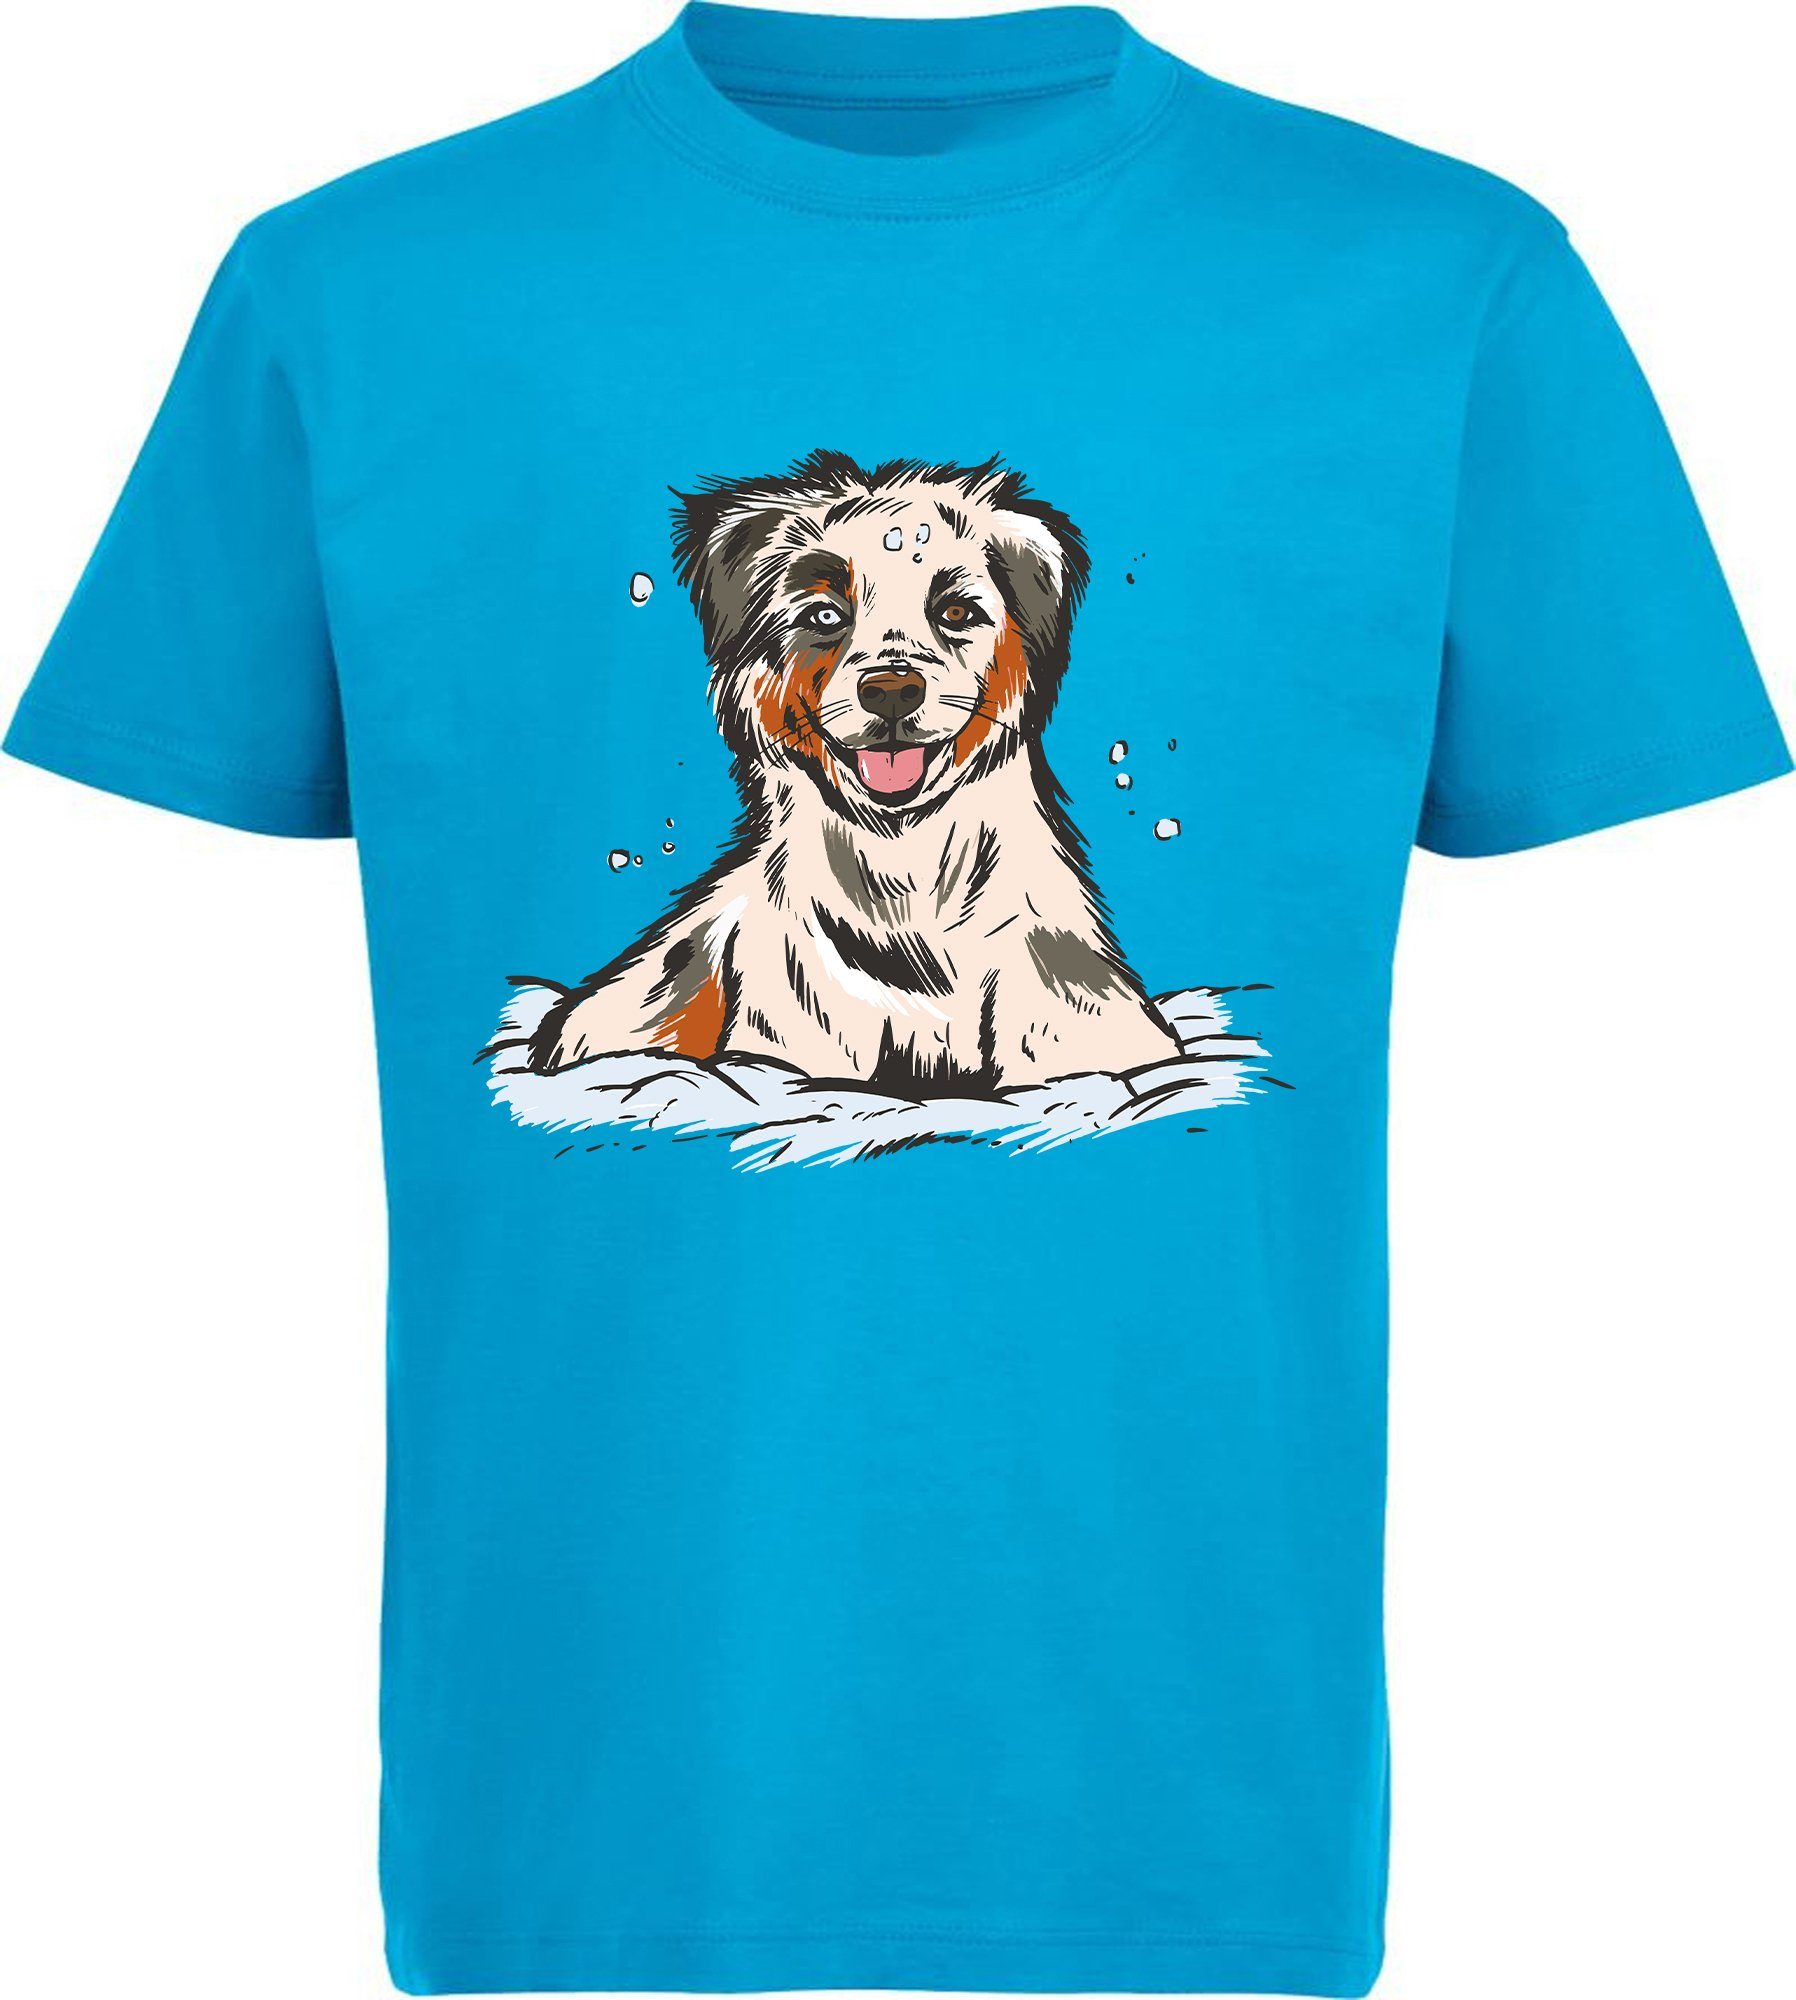 MyDesign24 Print-Shirt Australian und Hunde Aufdruck, bedrucktes i216 Baumwollshirt blau mit T-Shirt Jugend Welpe aqua Shepherd Kinder